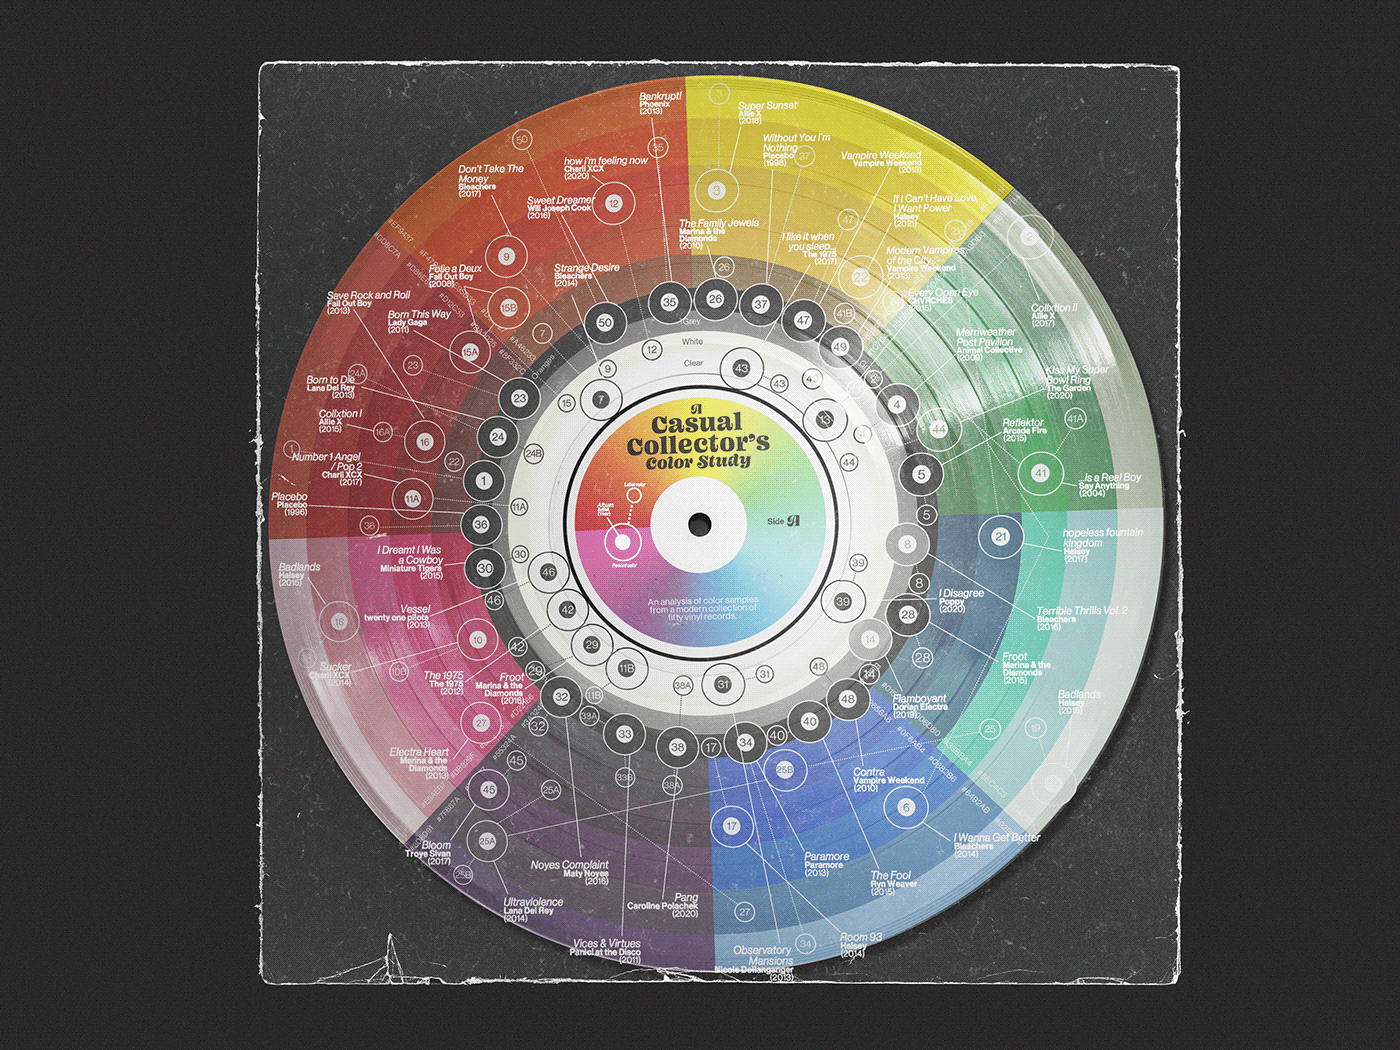 datavis DATAVISUALIZATION infographic music record vinyl